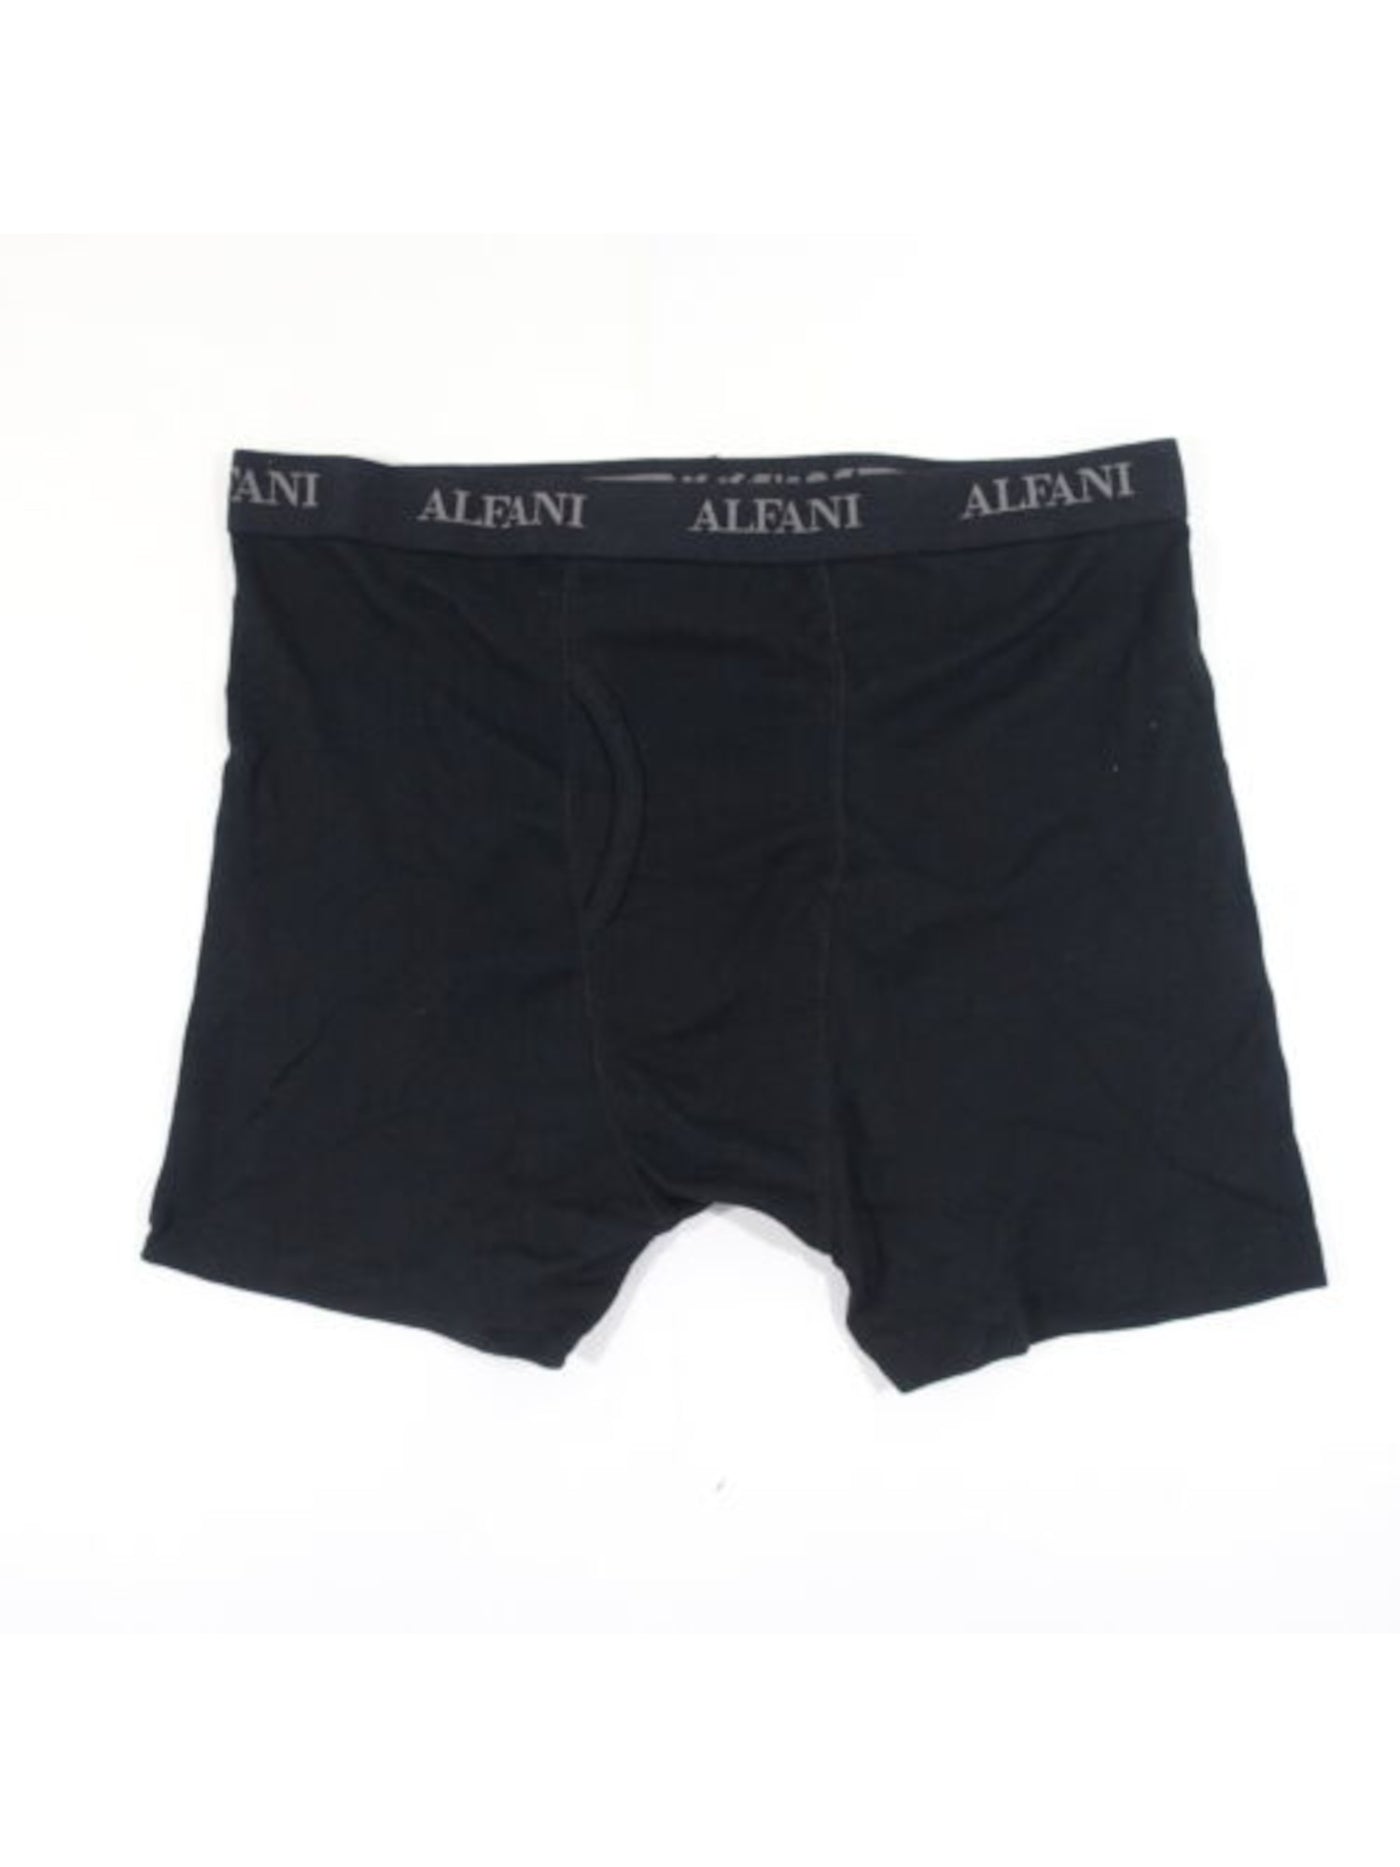 ALFATECH BY ALFANI Intimates Black Mesh Quick-Dry Boxer Brief Underwear XL